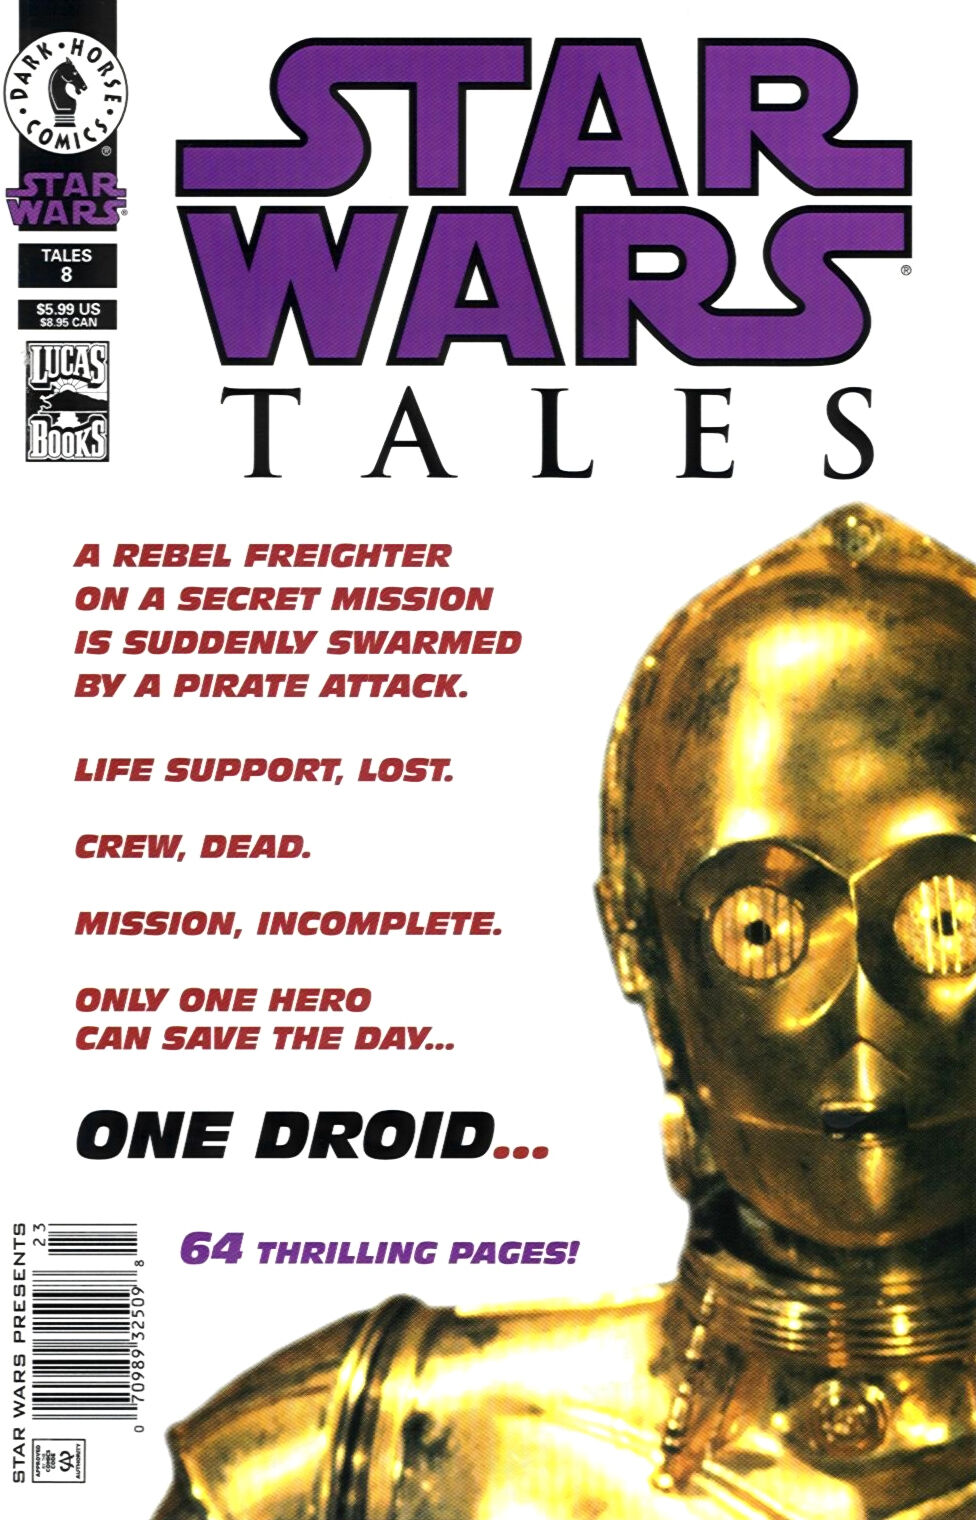 Star Wars Tales (1999) #8 B Photo Cover (9.2)